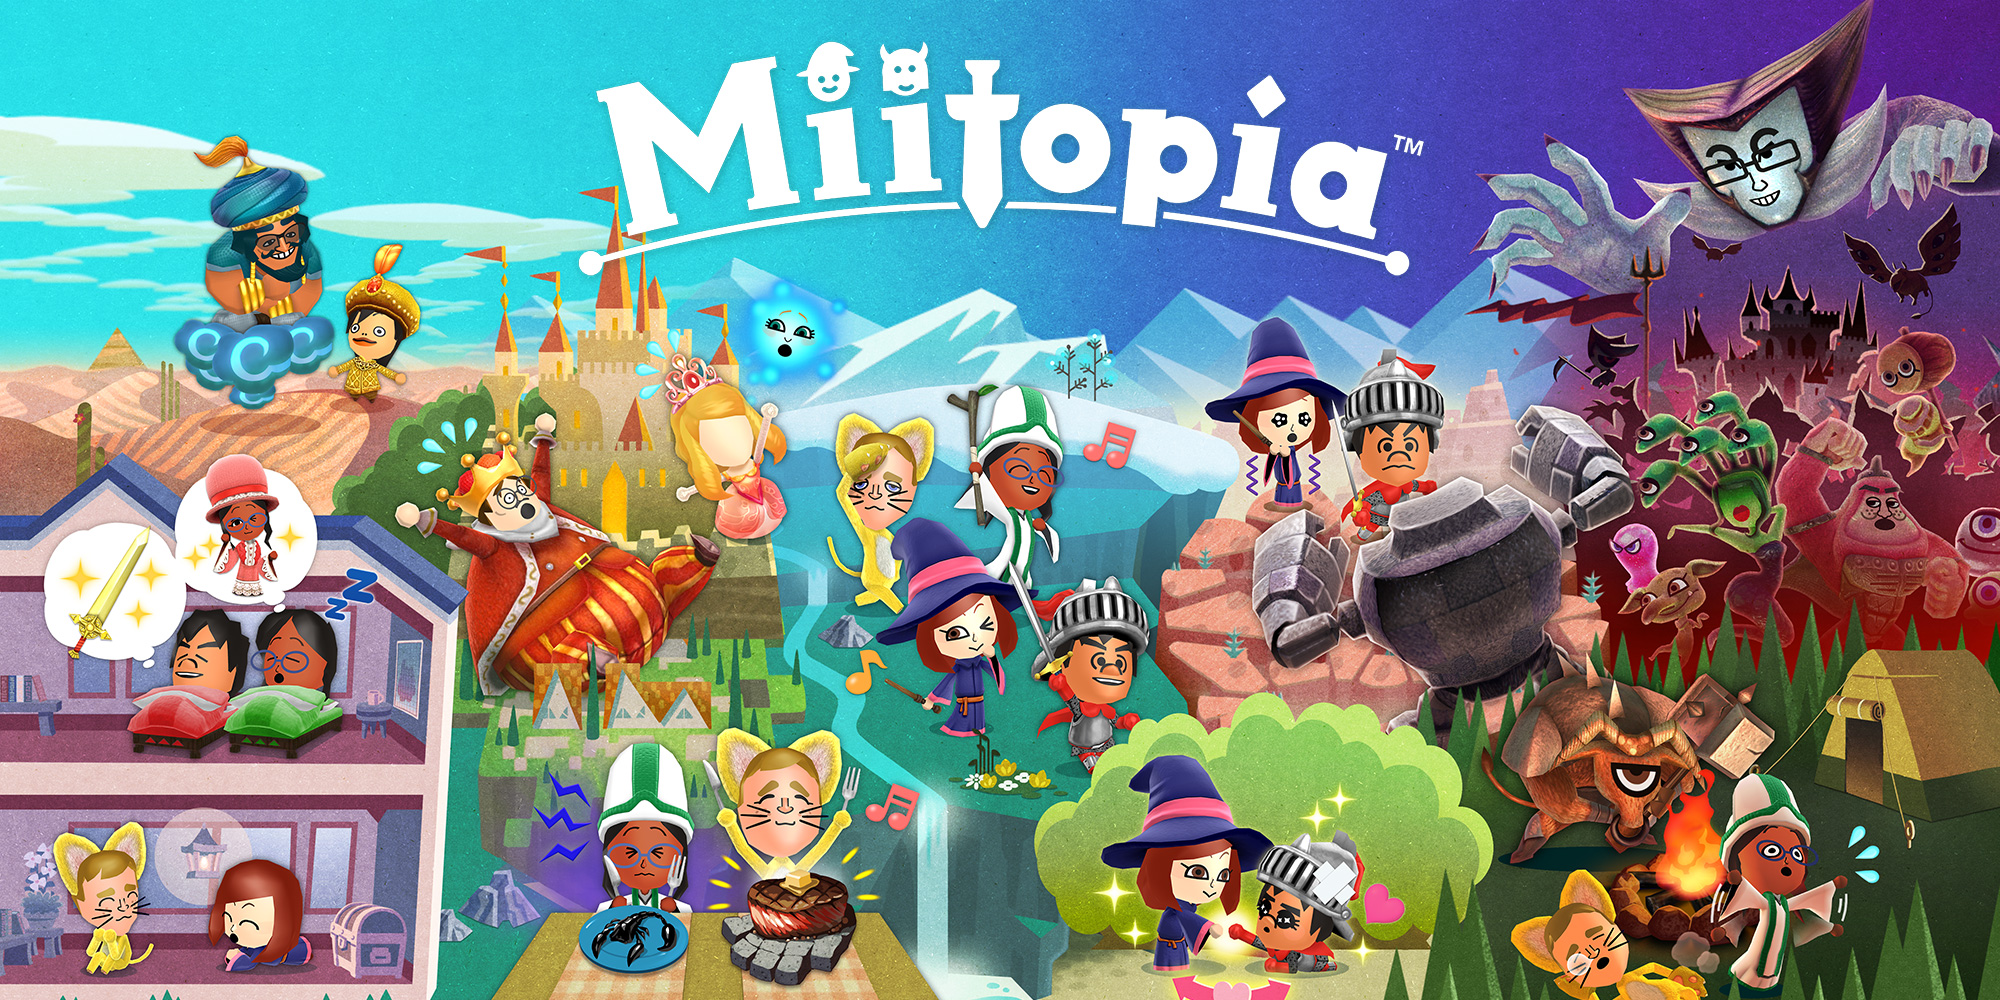 Add DanTDM to your Miitopia adventure!